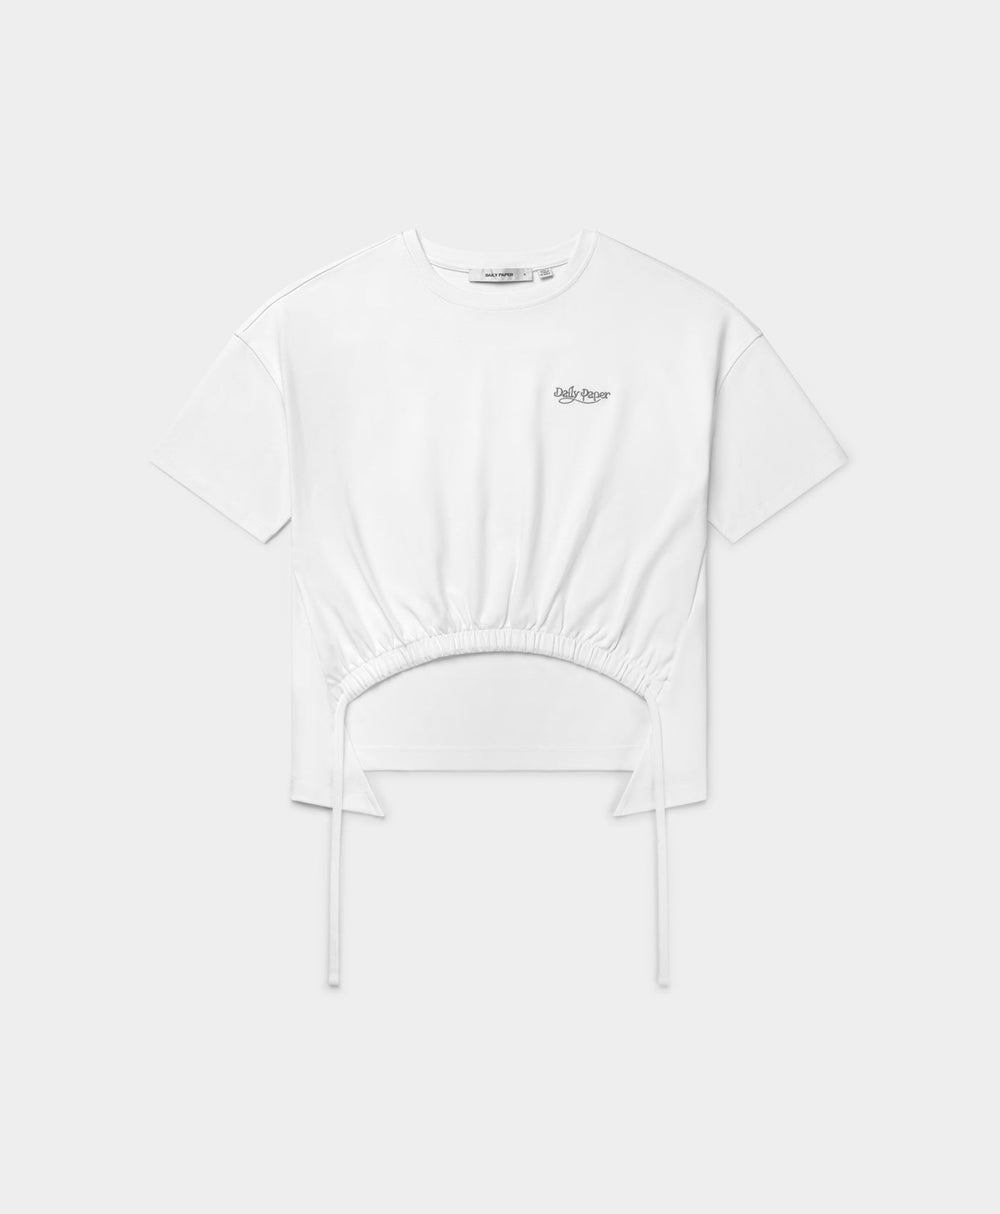 DP - White Desta T-Shirt - Packshot - Front